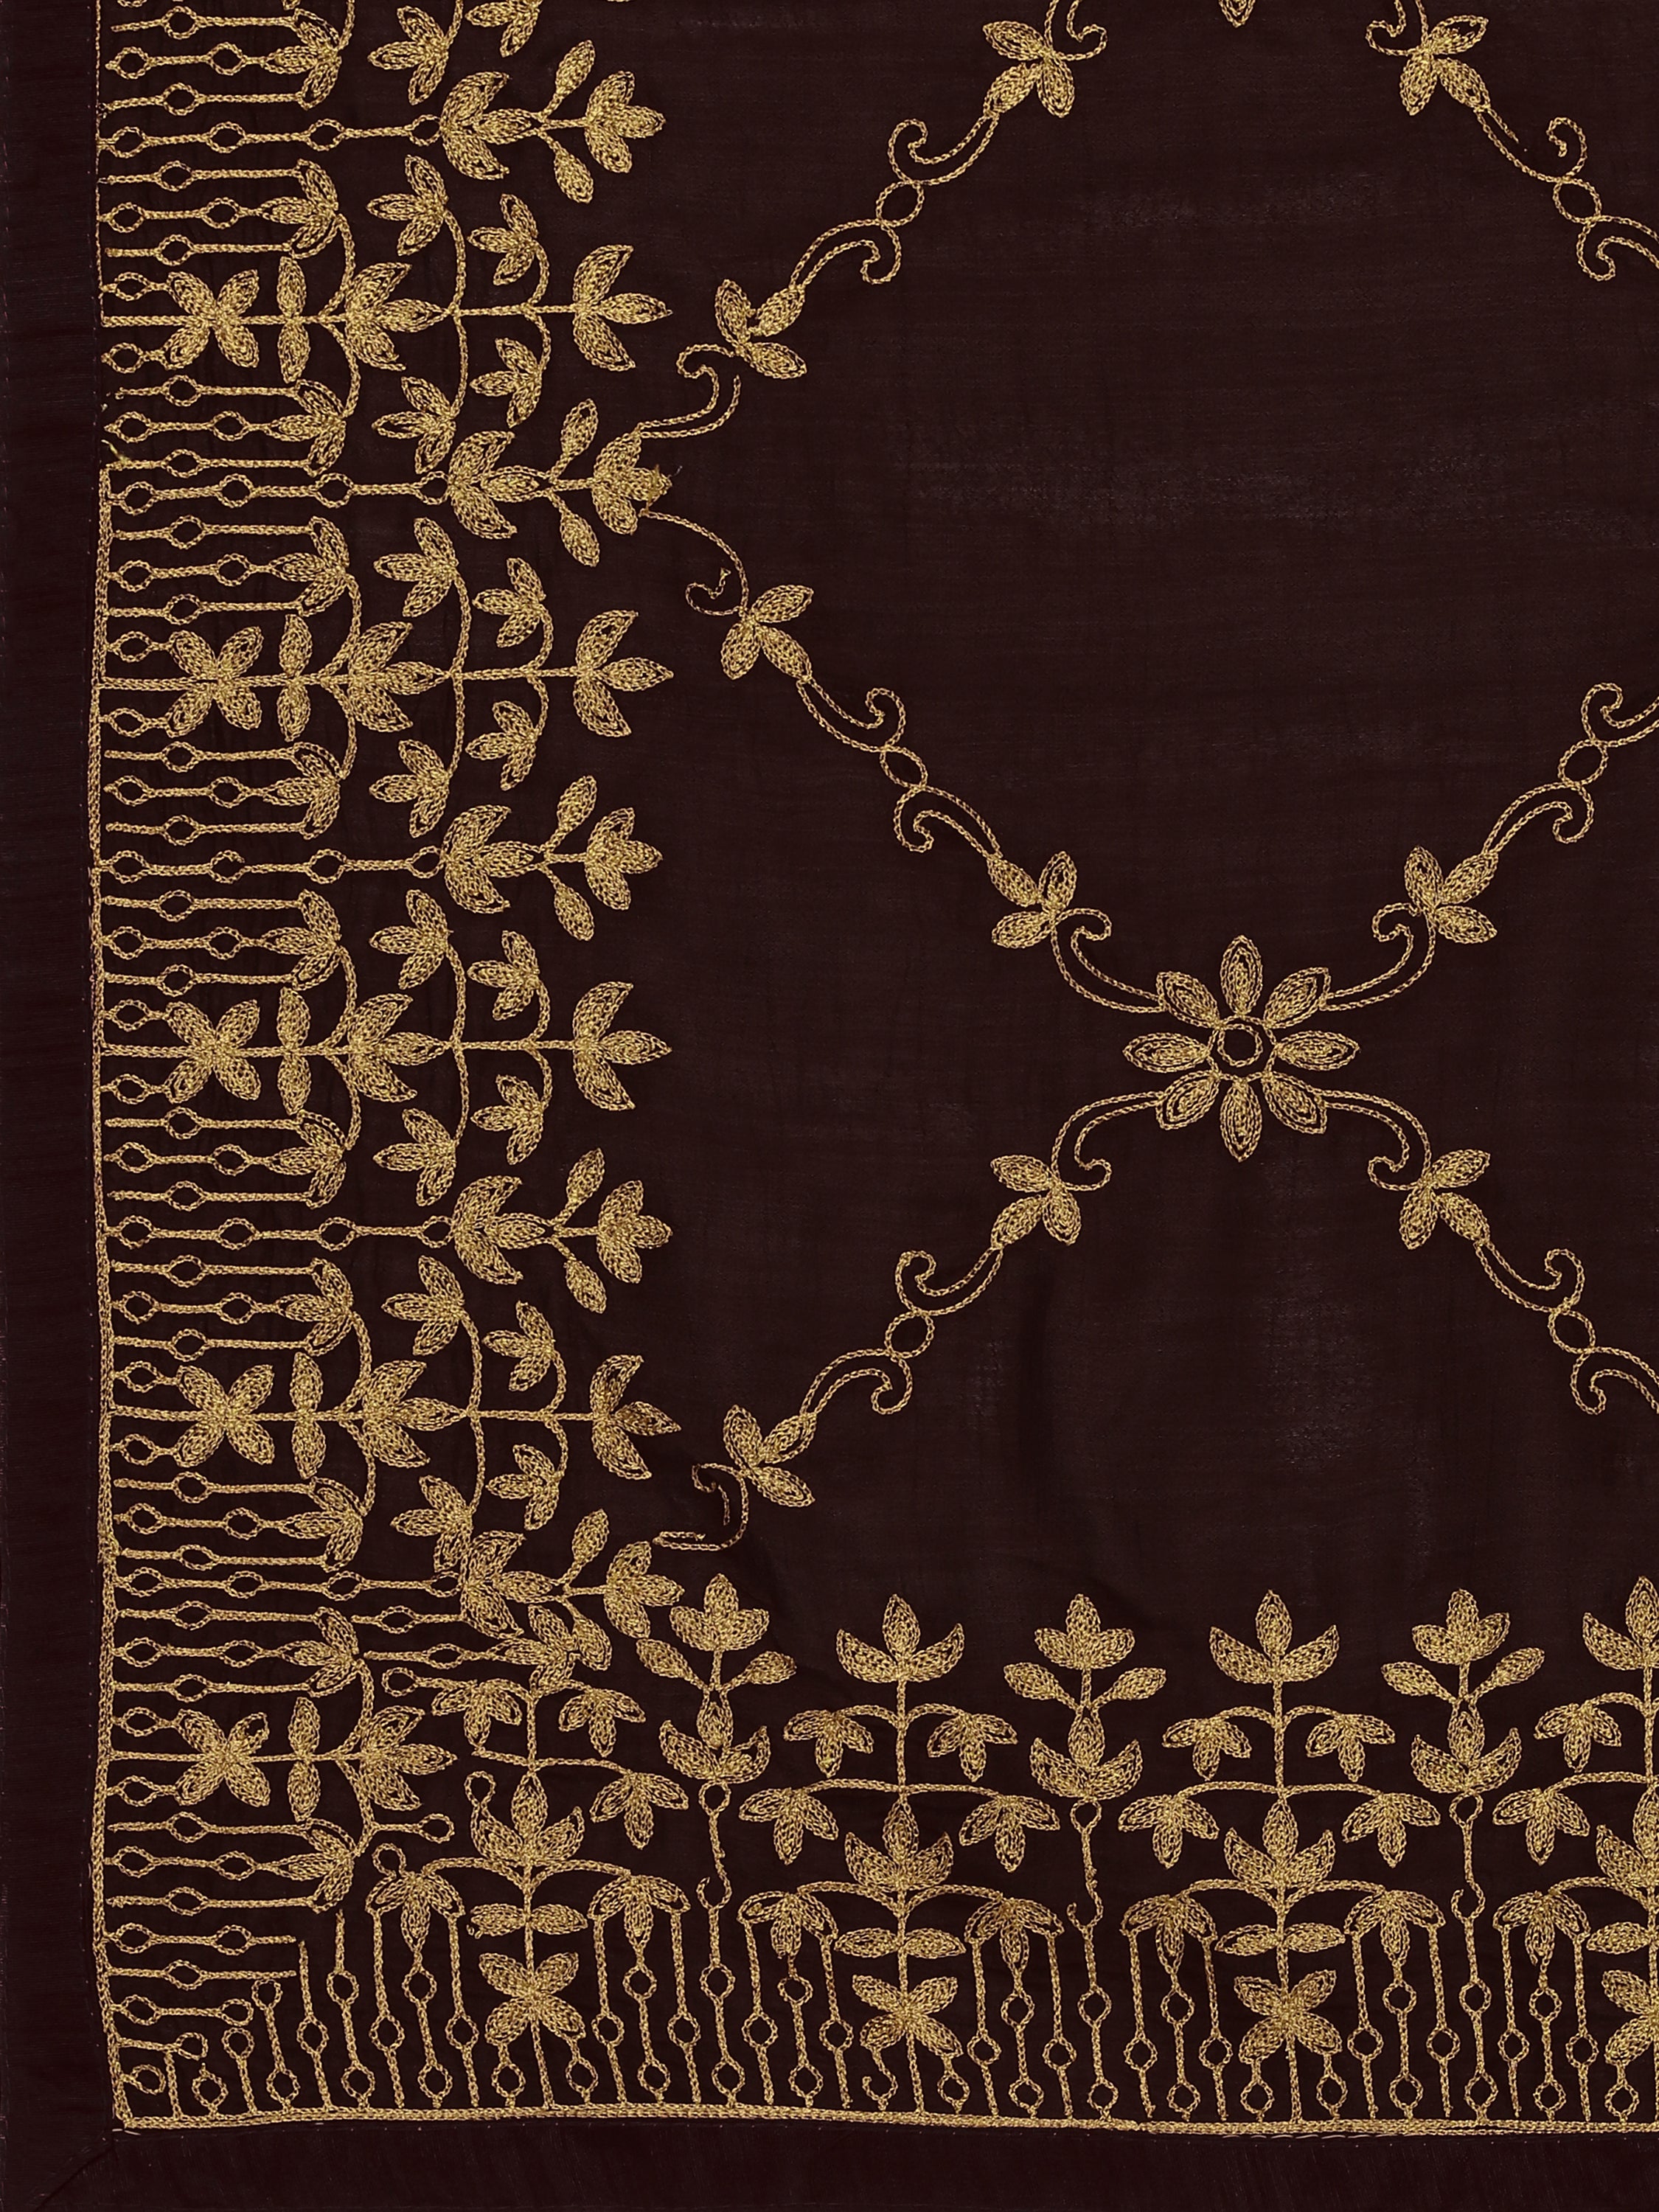 Women's Silk Blend Sari Having Ahir Embroider Detailed Pallu With Blouse Piece (Coffee Brown) - NIMIDHYA